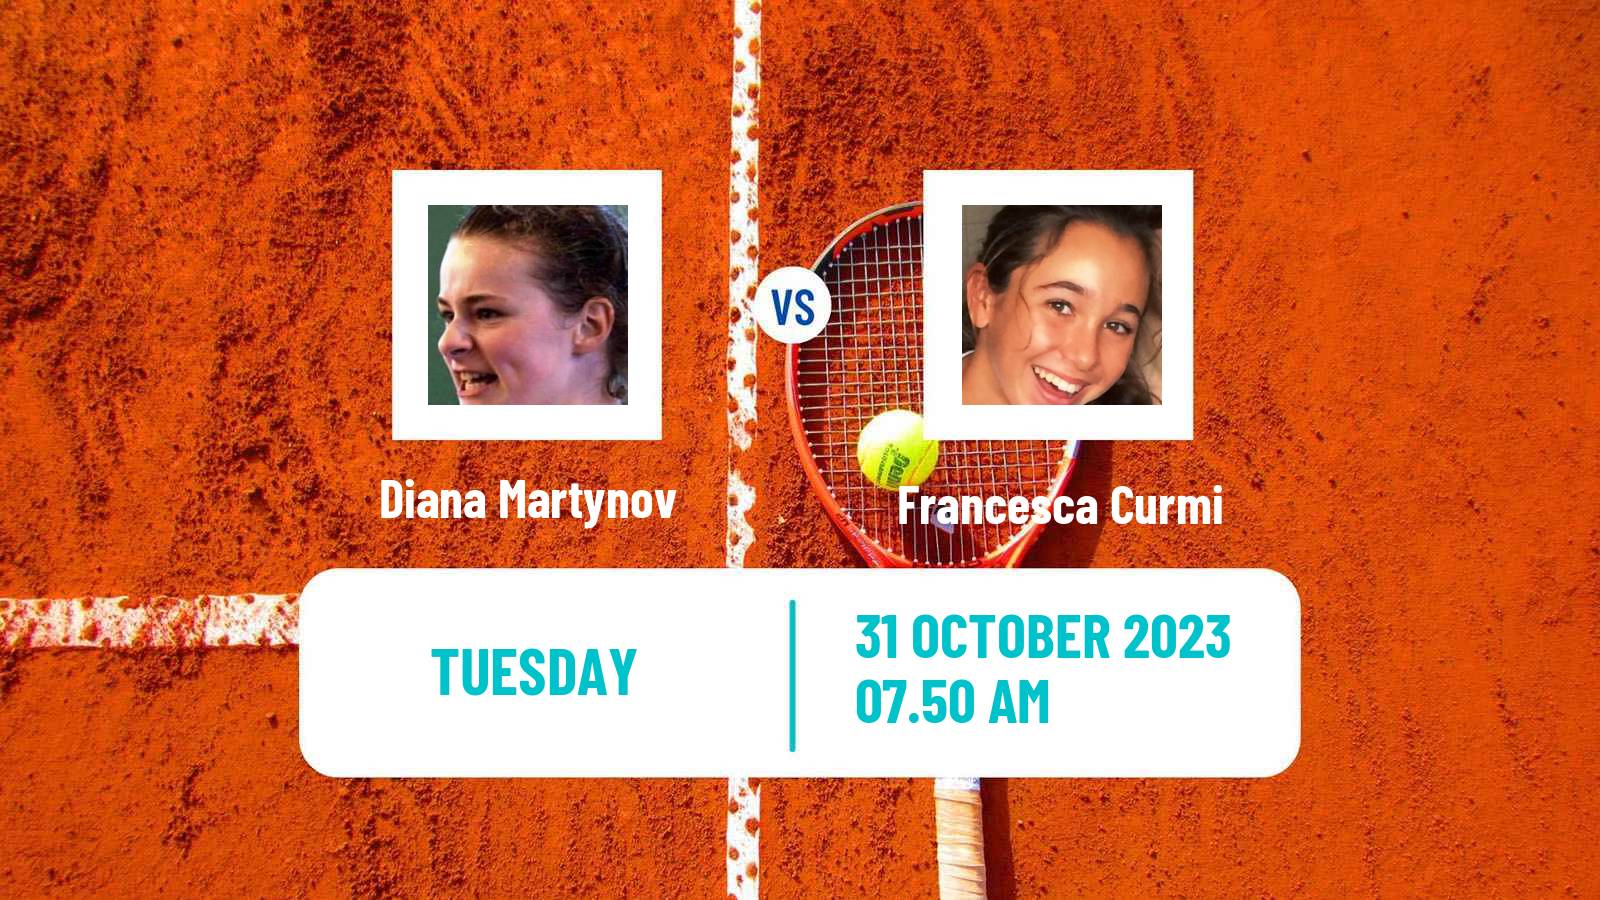 Tennis ITF W60 Nantes Women Diana Martynov - Francesca Curmi